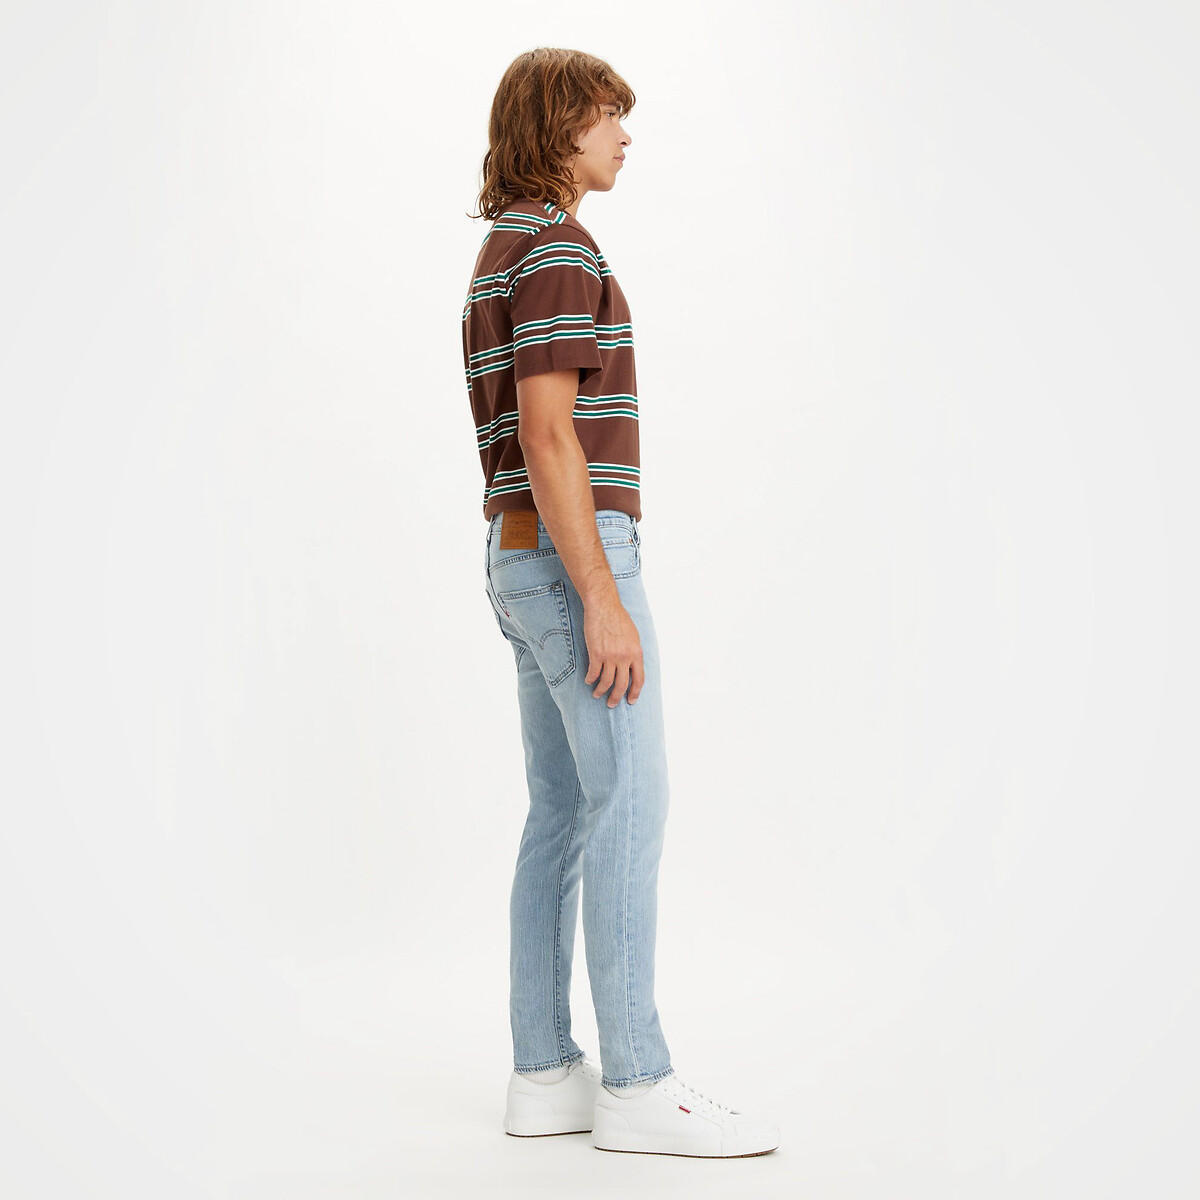 Levi's Slim jeans taper 512™